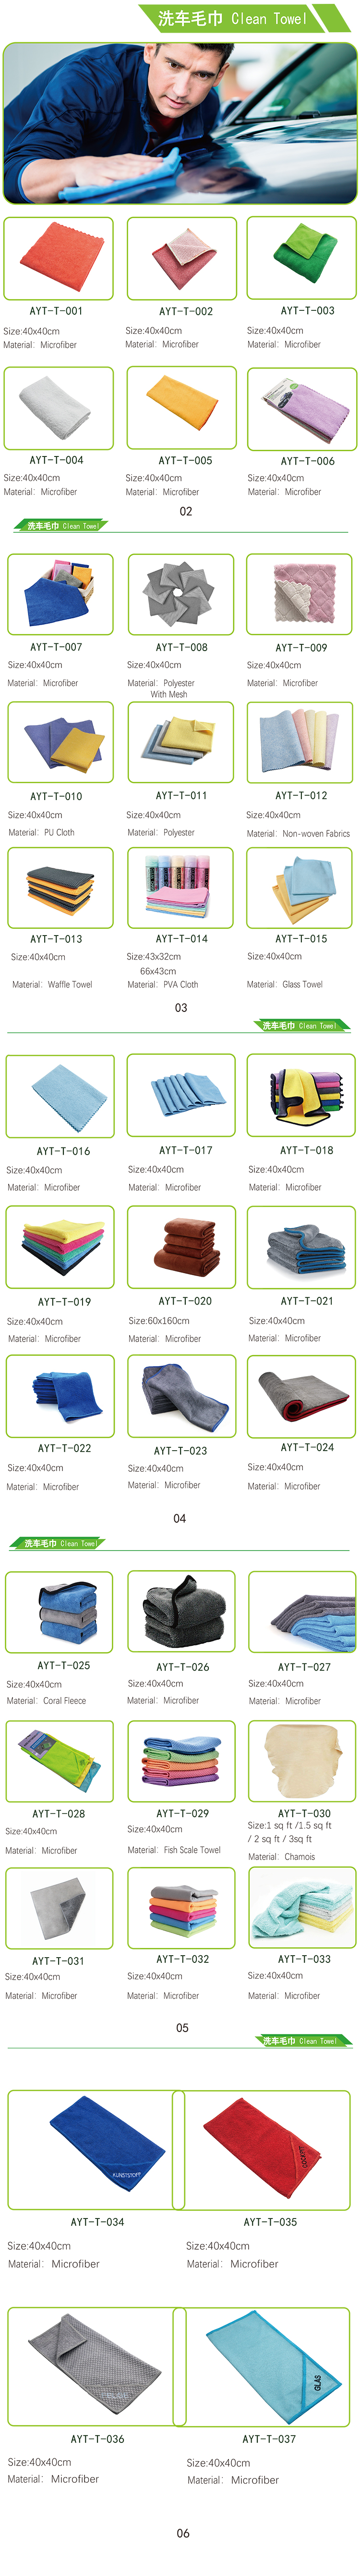 NINGBO AITE HOUSEWARES CO, LTD Katalog Für Waschhandtücher